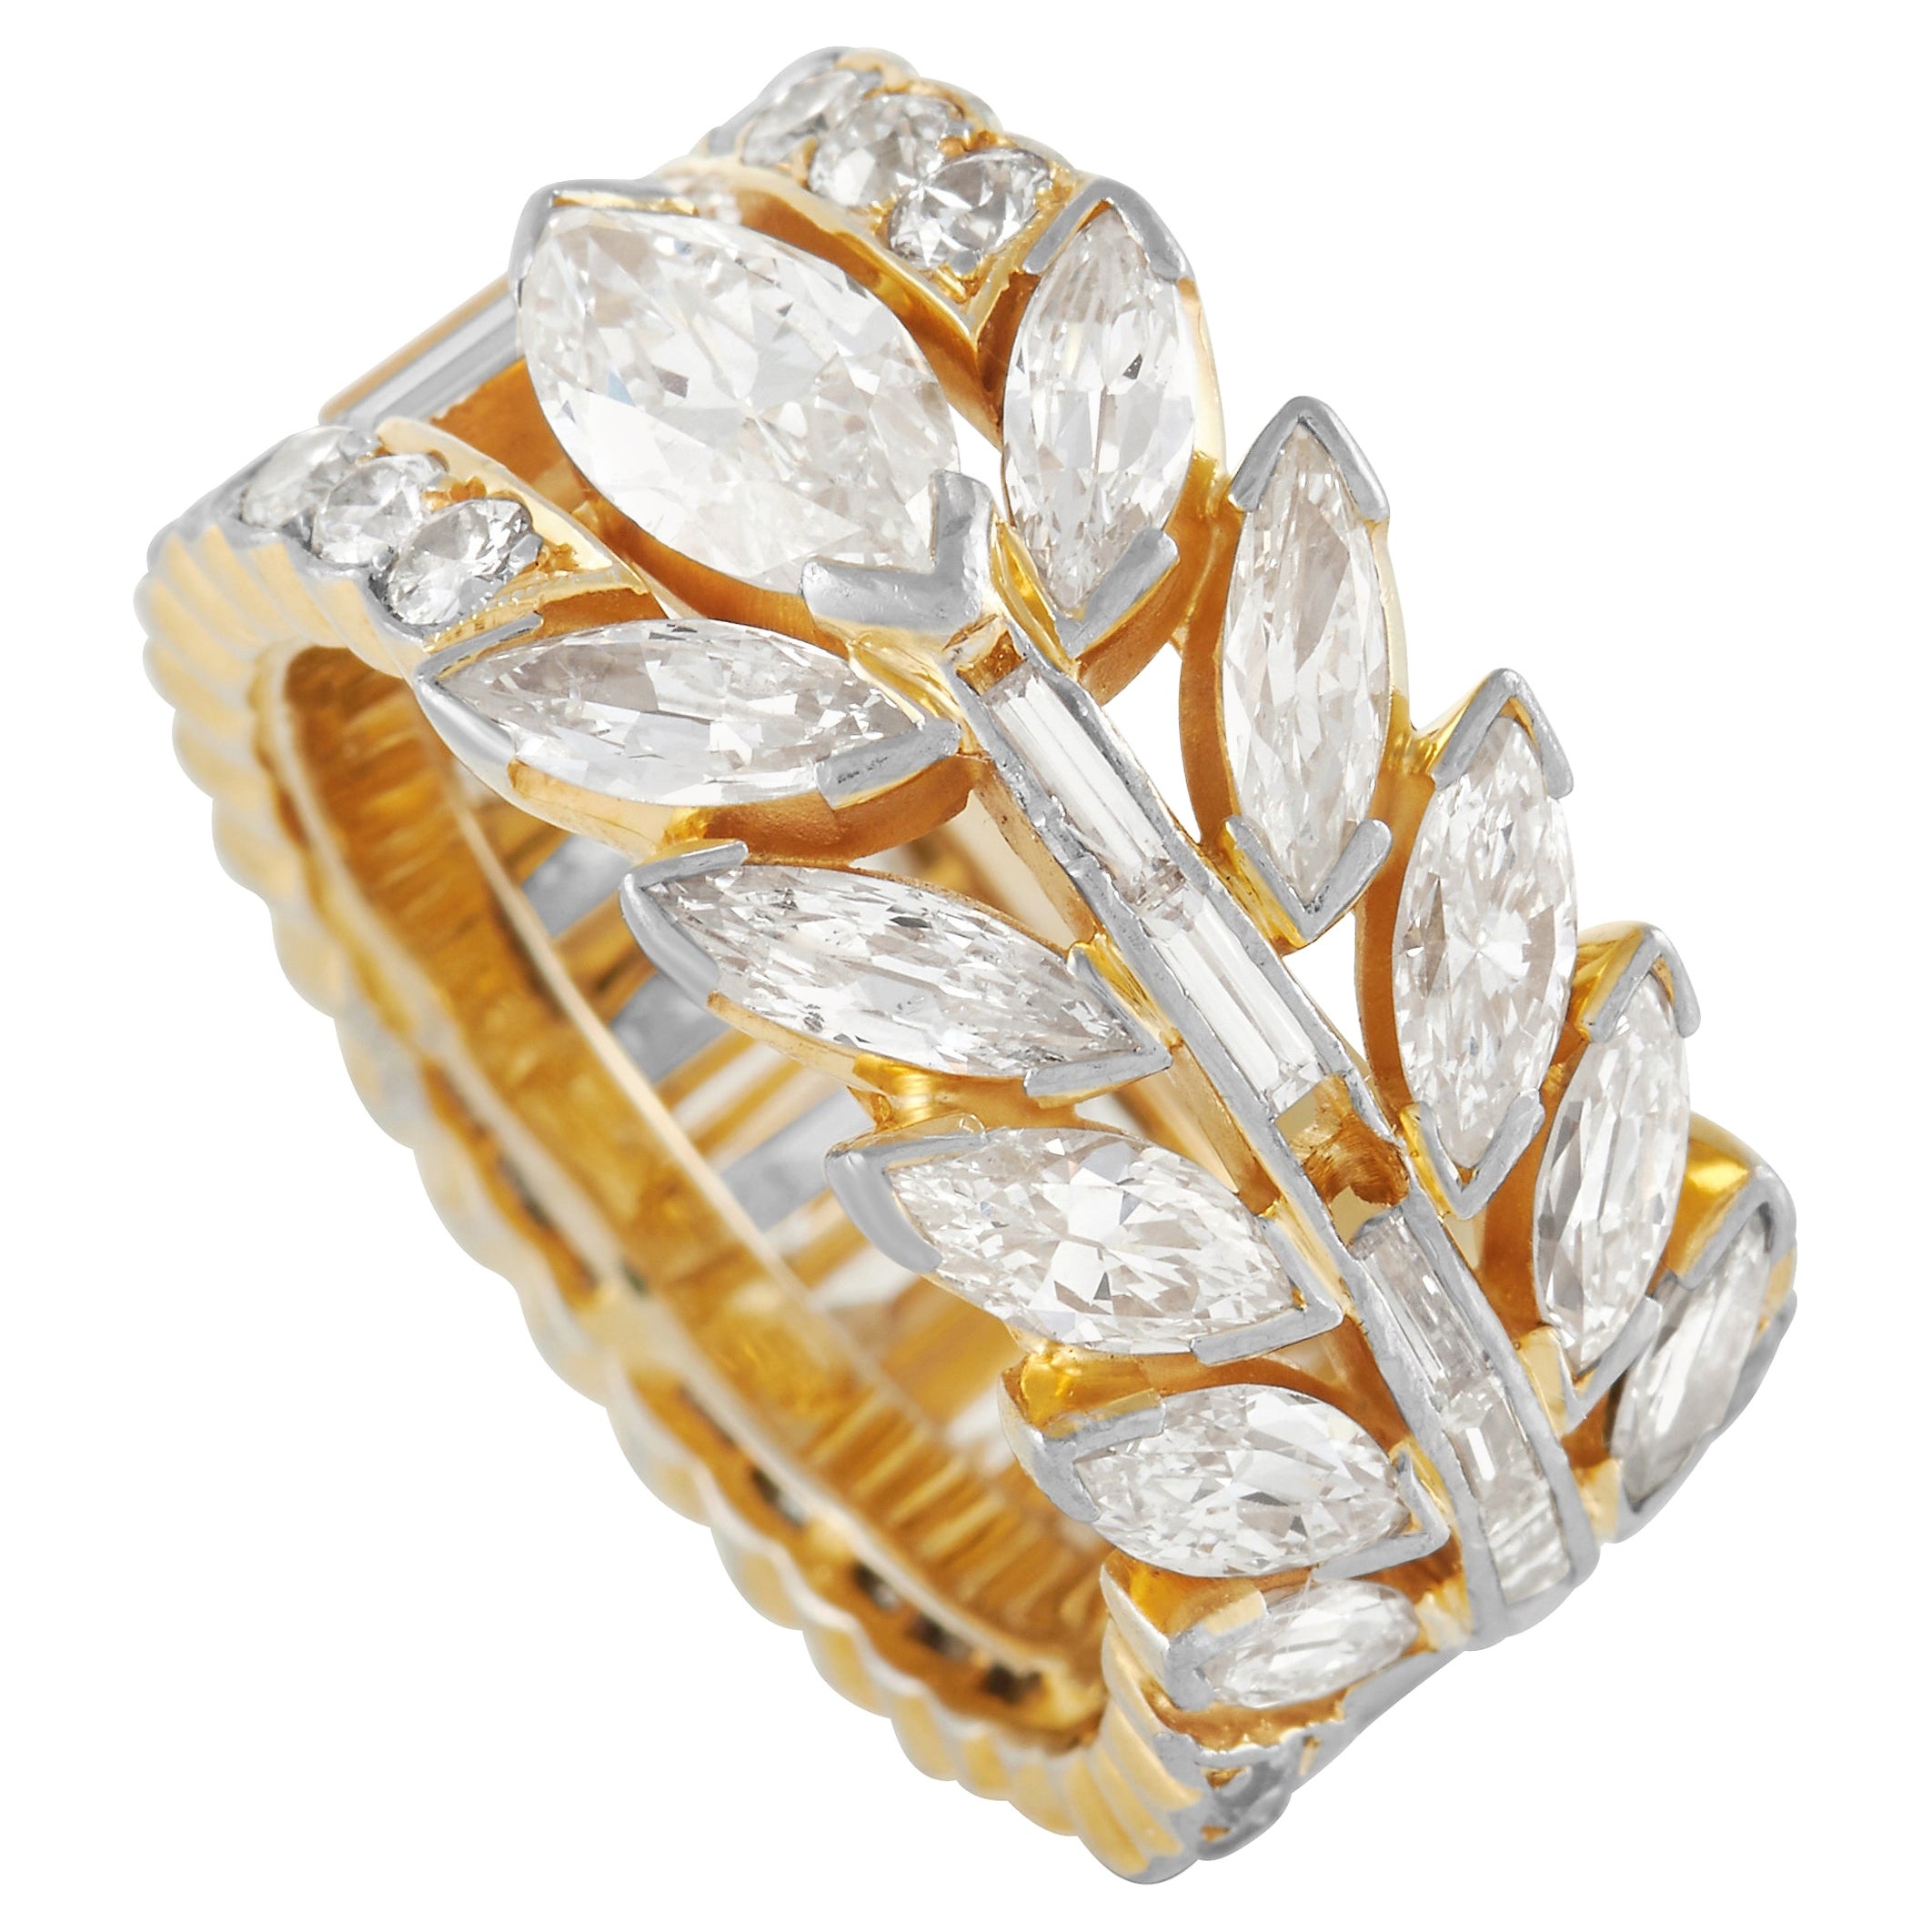 LB Exclusive 18K Yellow Gold 5.75 Ct Diamond Wedding Ring